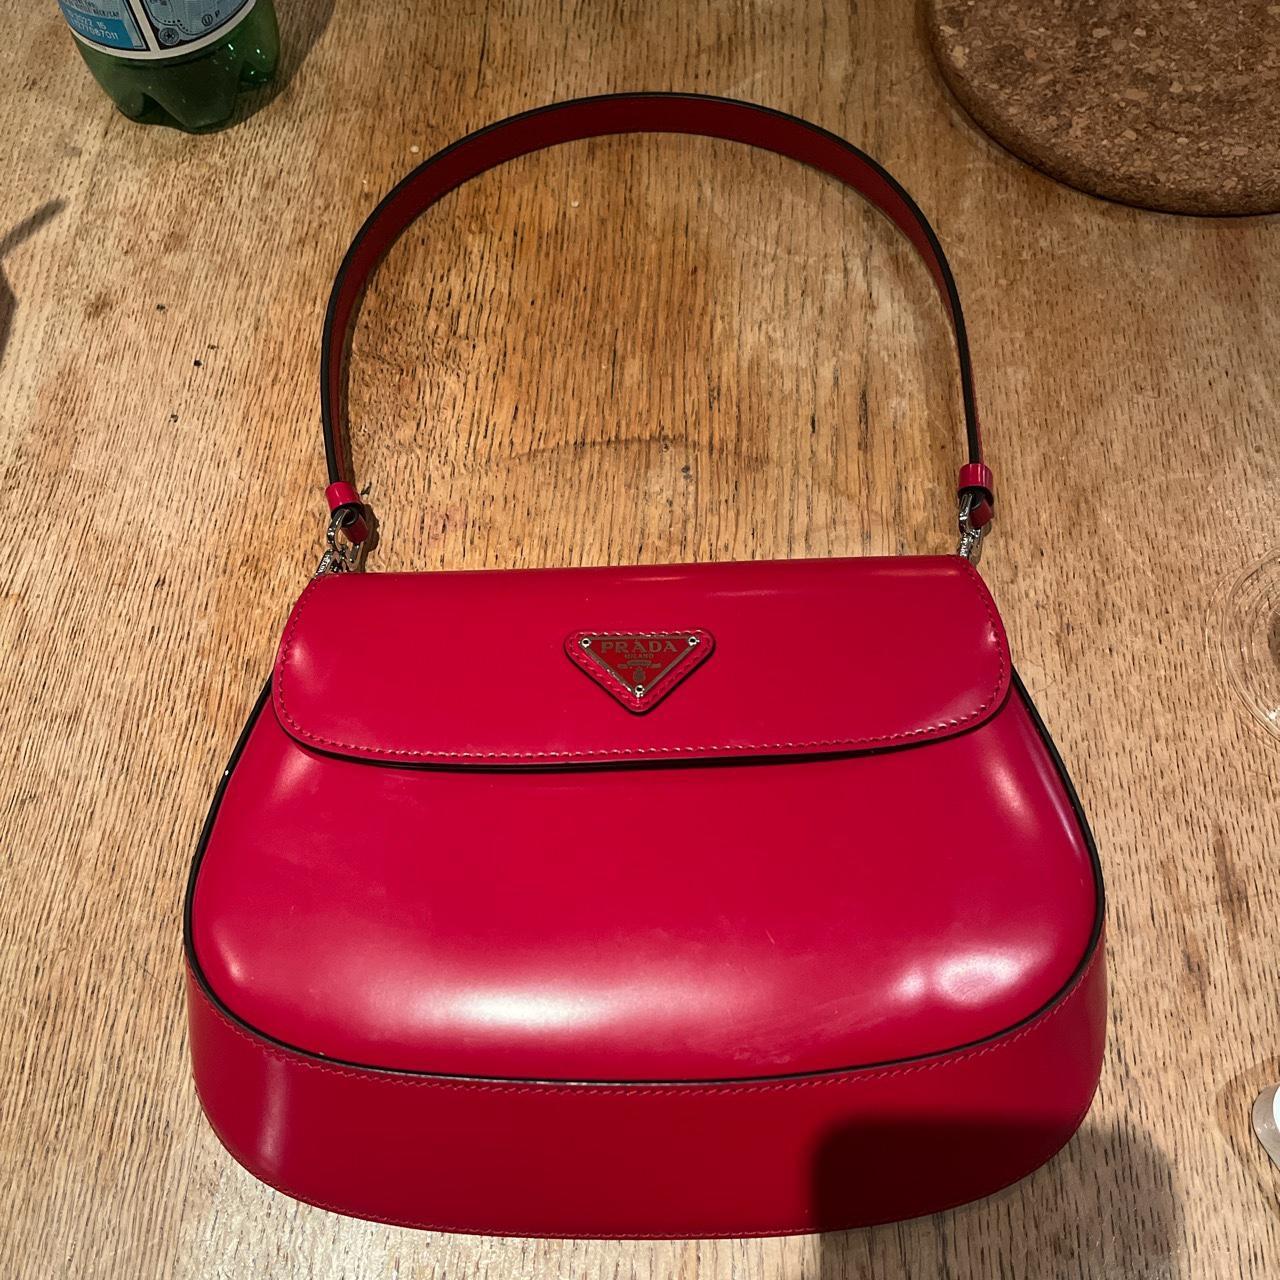 Prada Cleo brushed leather mini bag in scarlet red - Depop